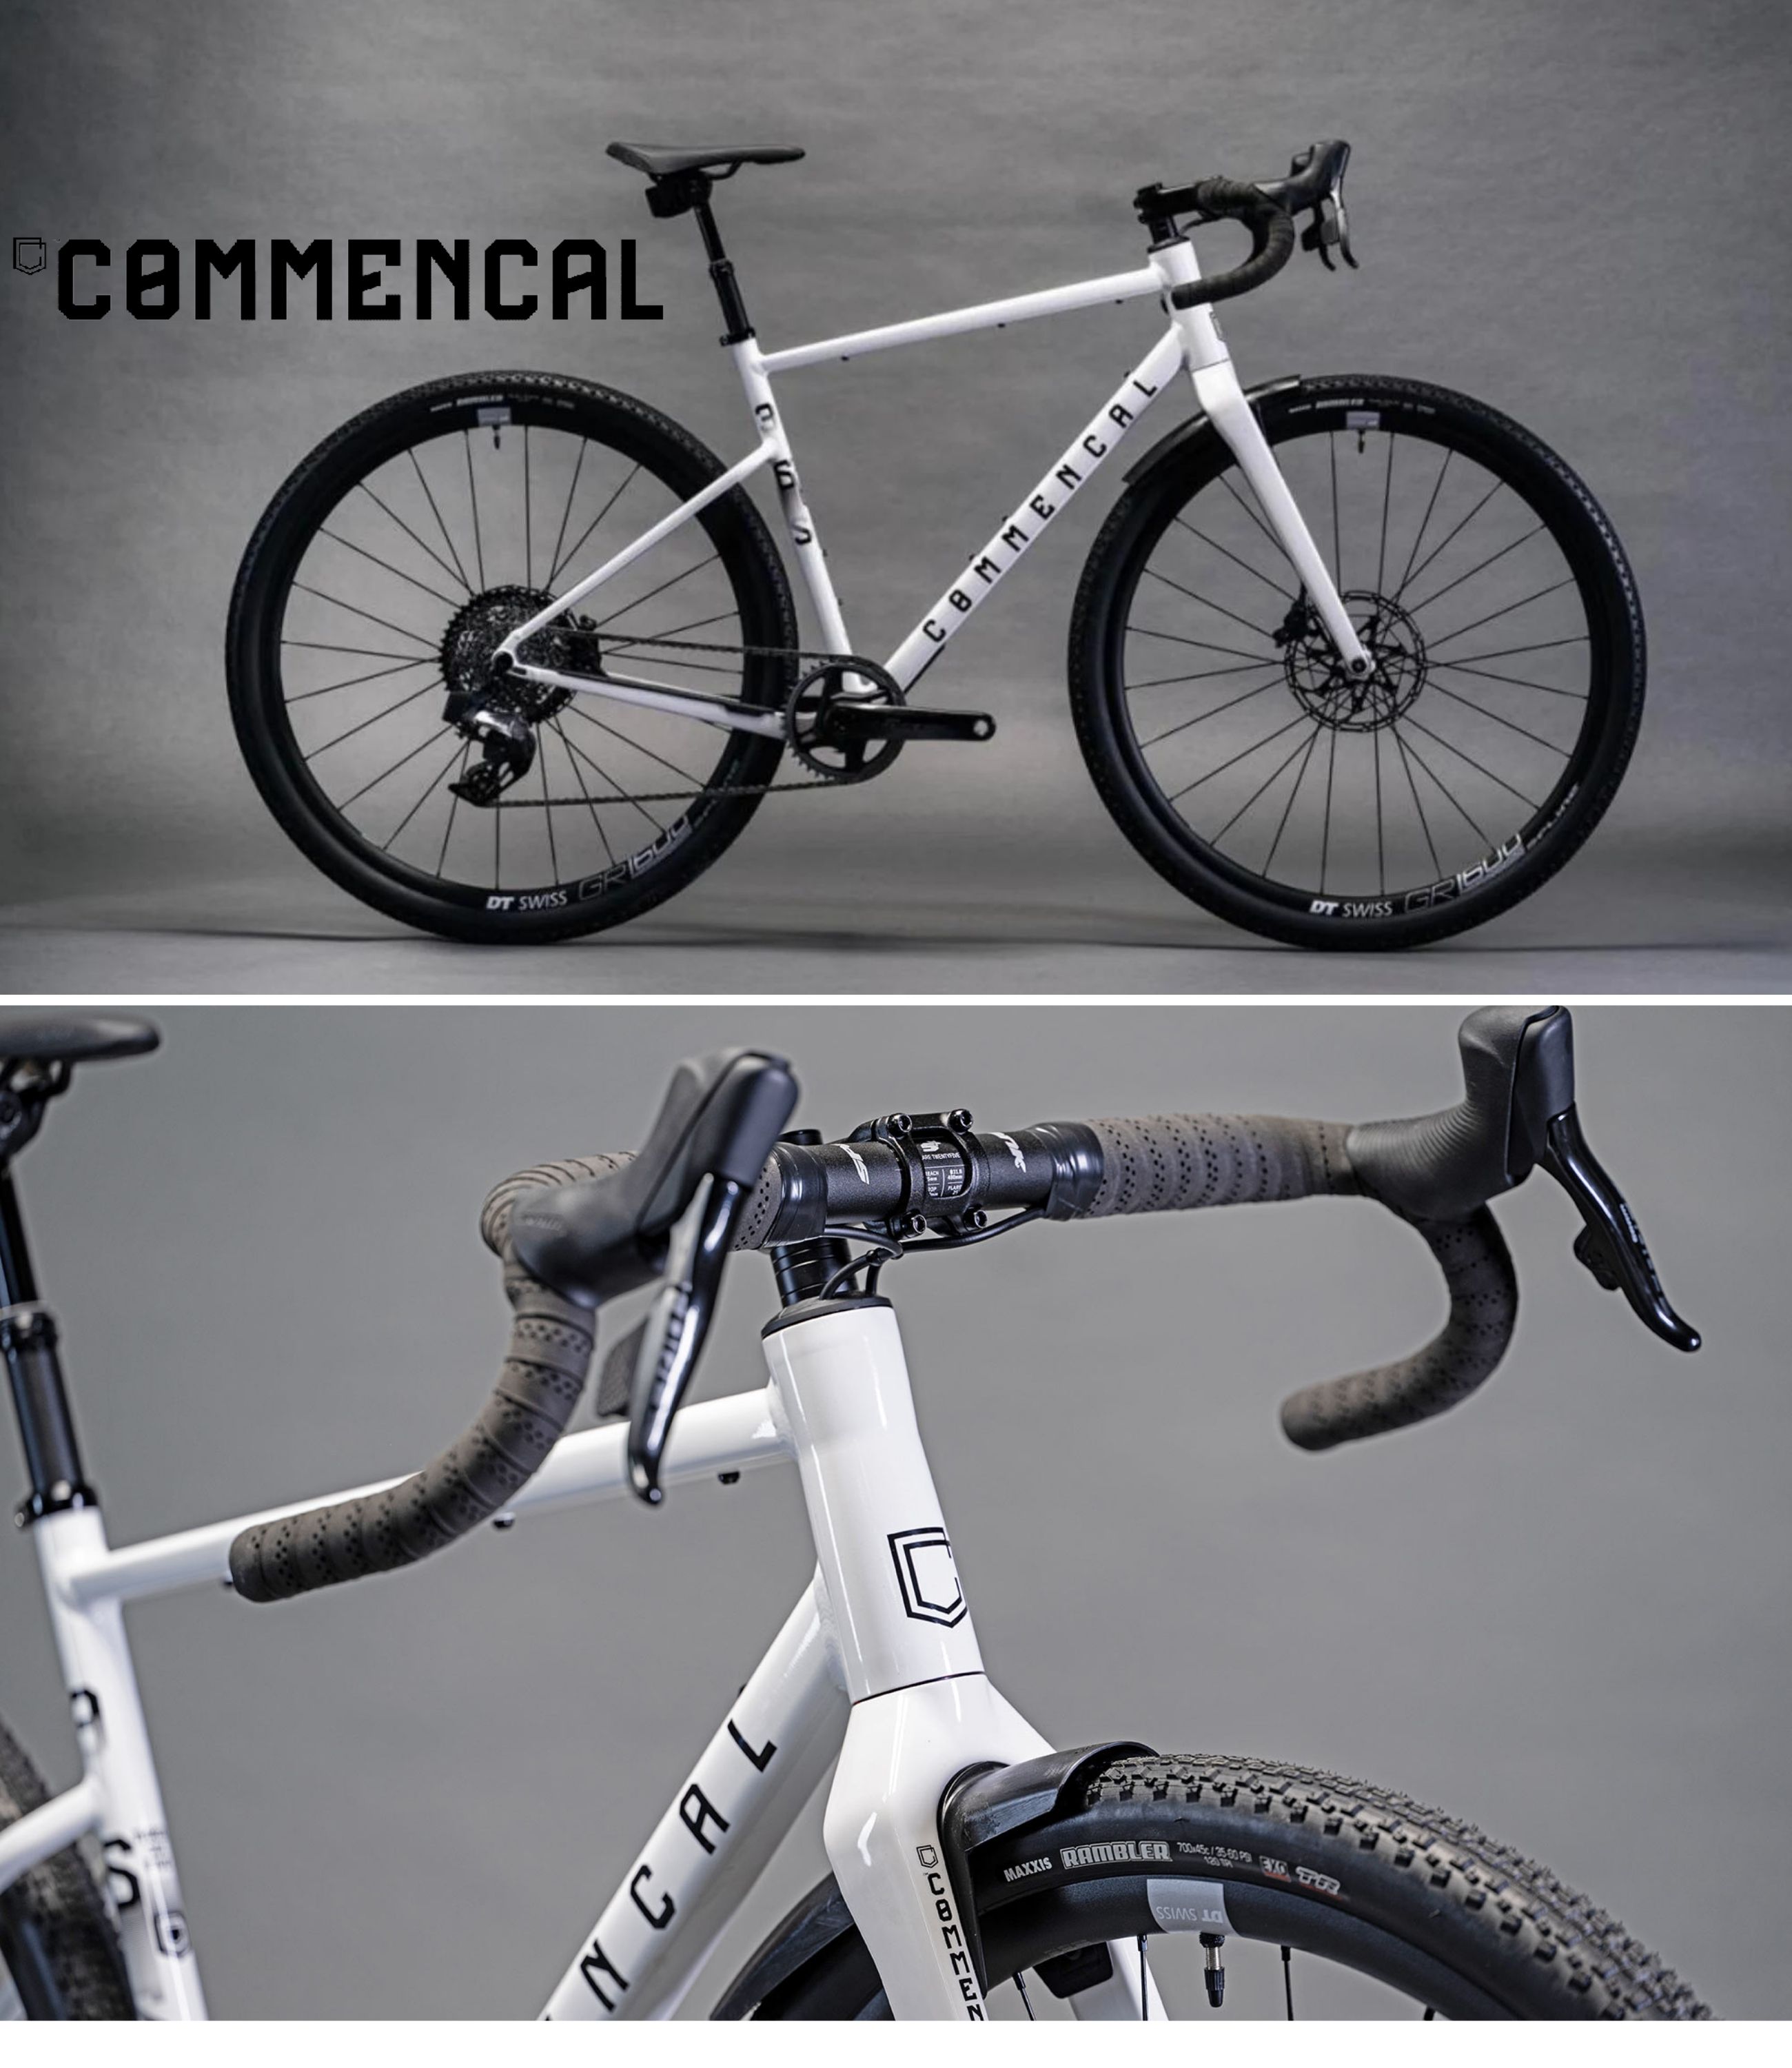 Commencal’s first gravel bike has a full-aluminium construction